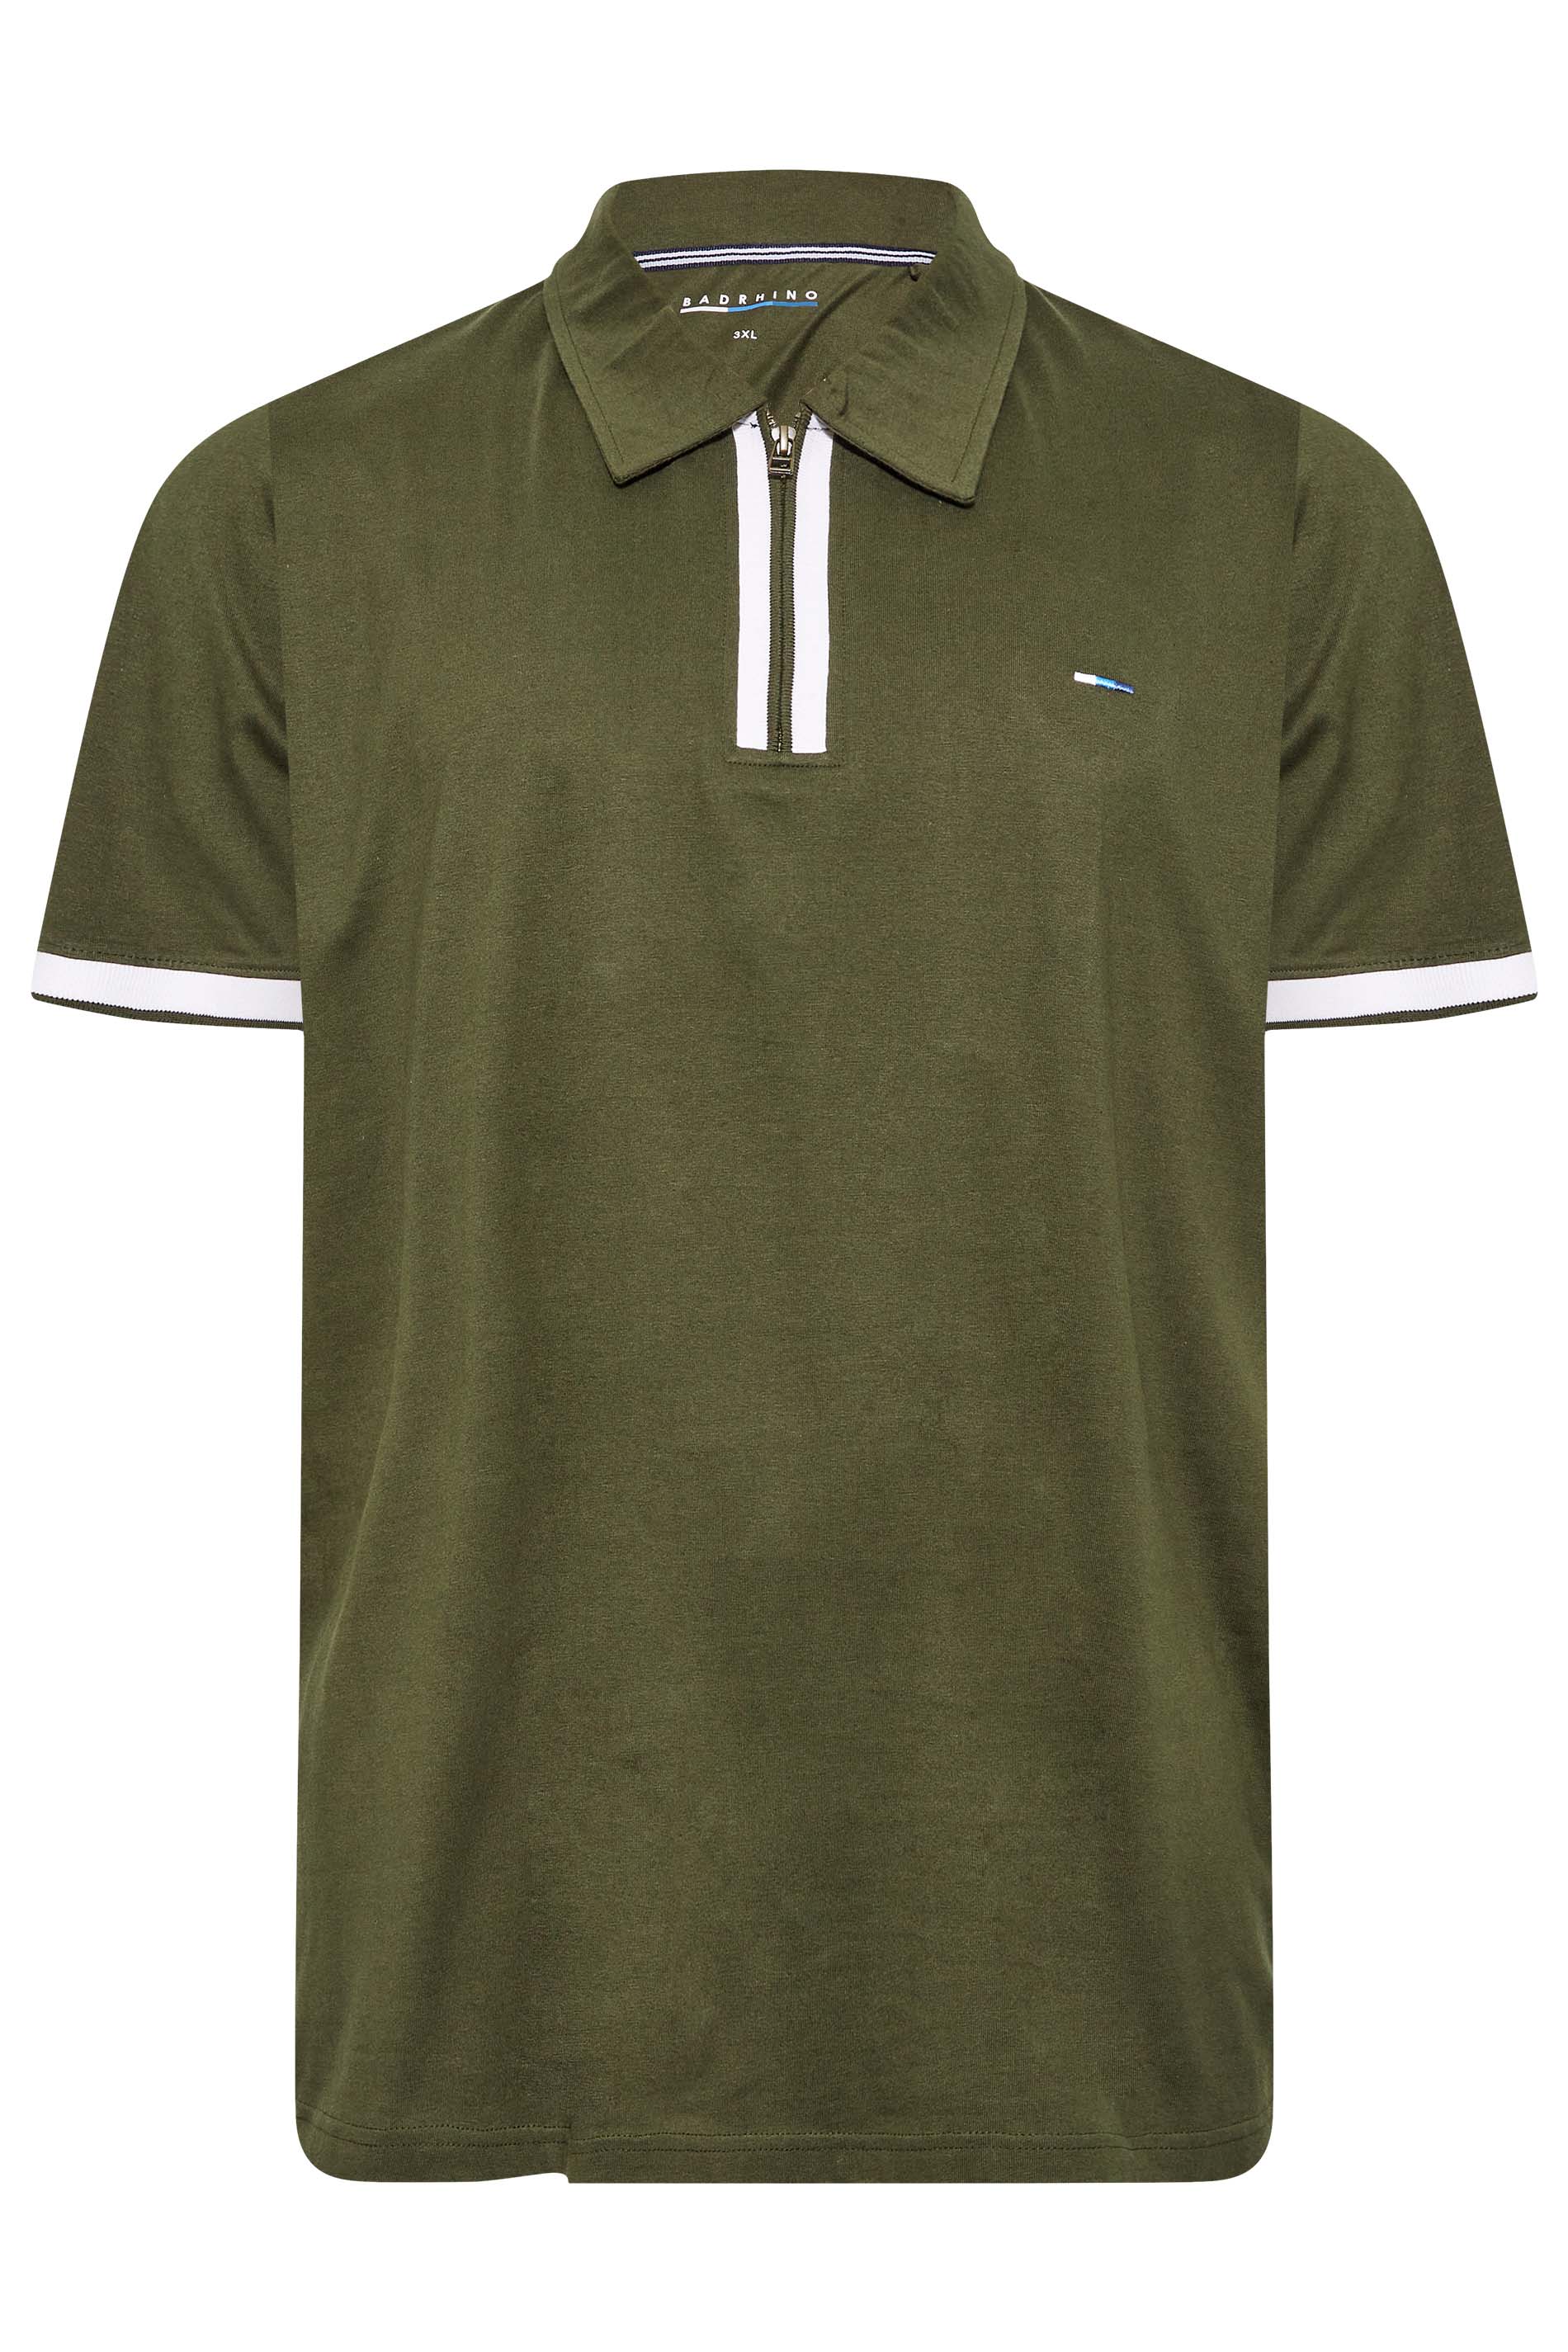 BadRhino Mens Big & Tall Khaki Green Jersey Zip Polo Shirt | BadRhino 3